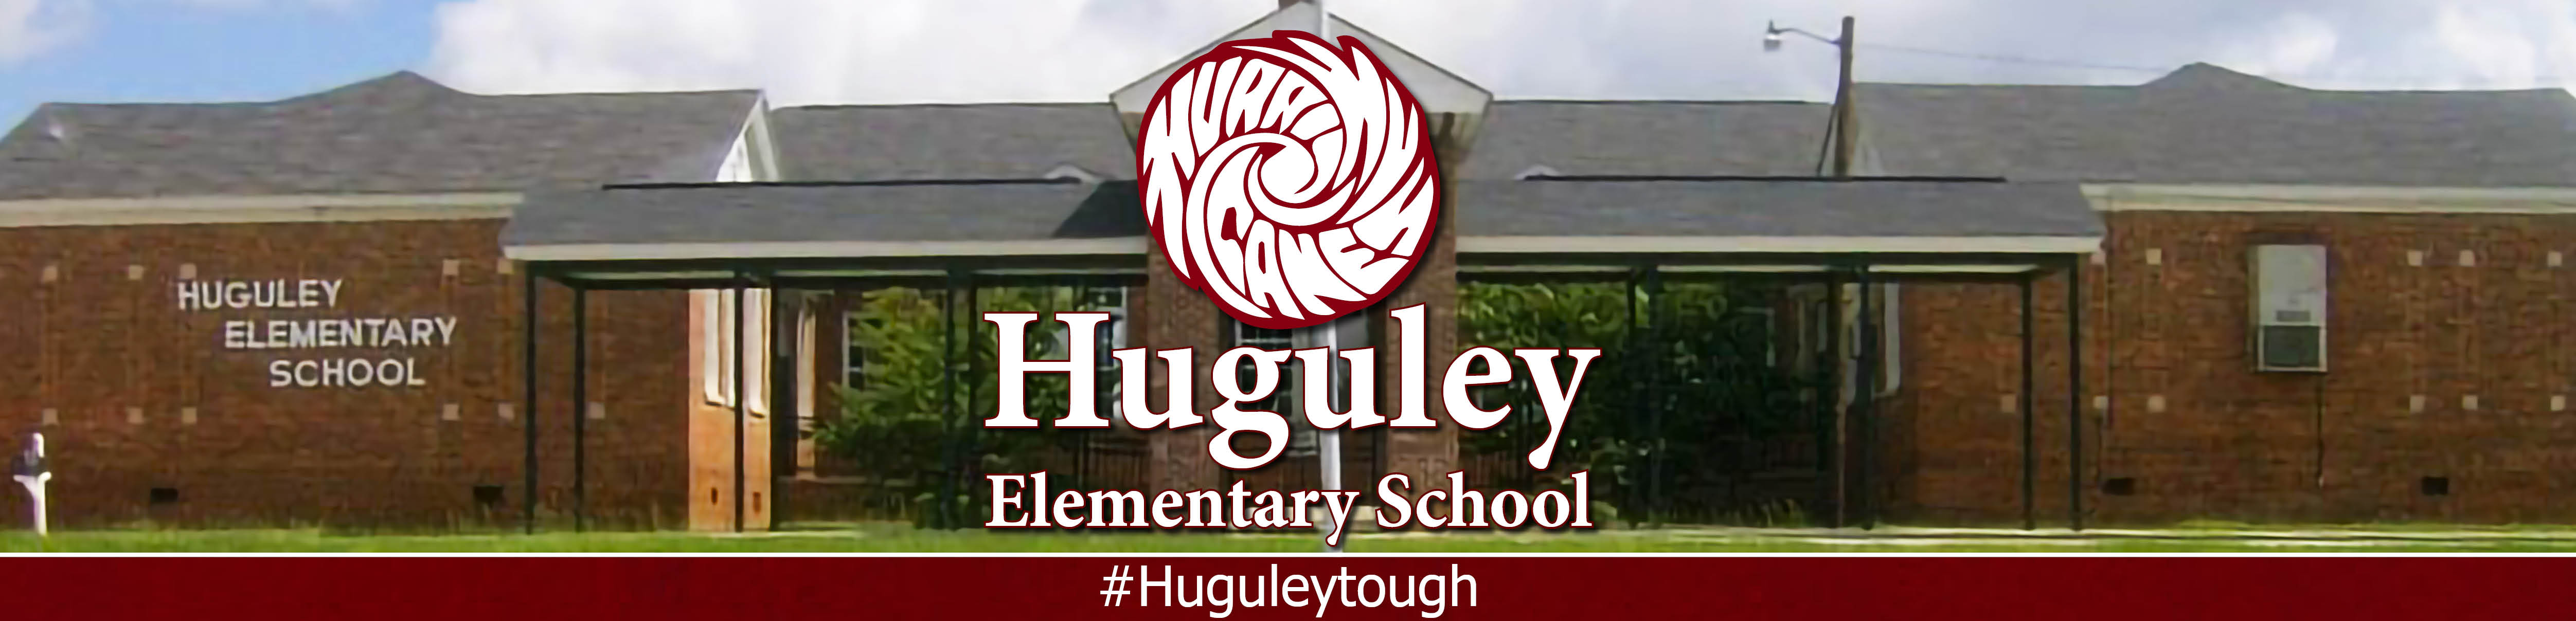 Huguley Elementary School 